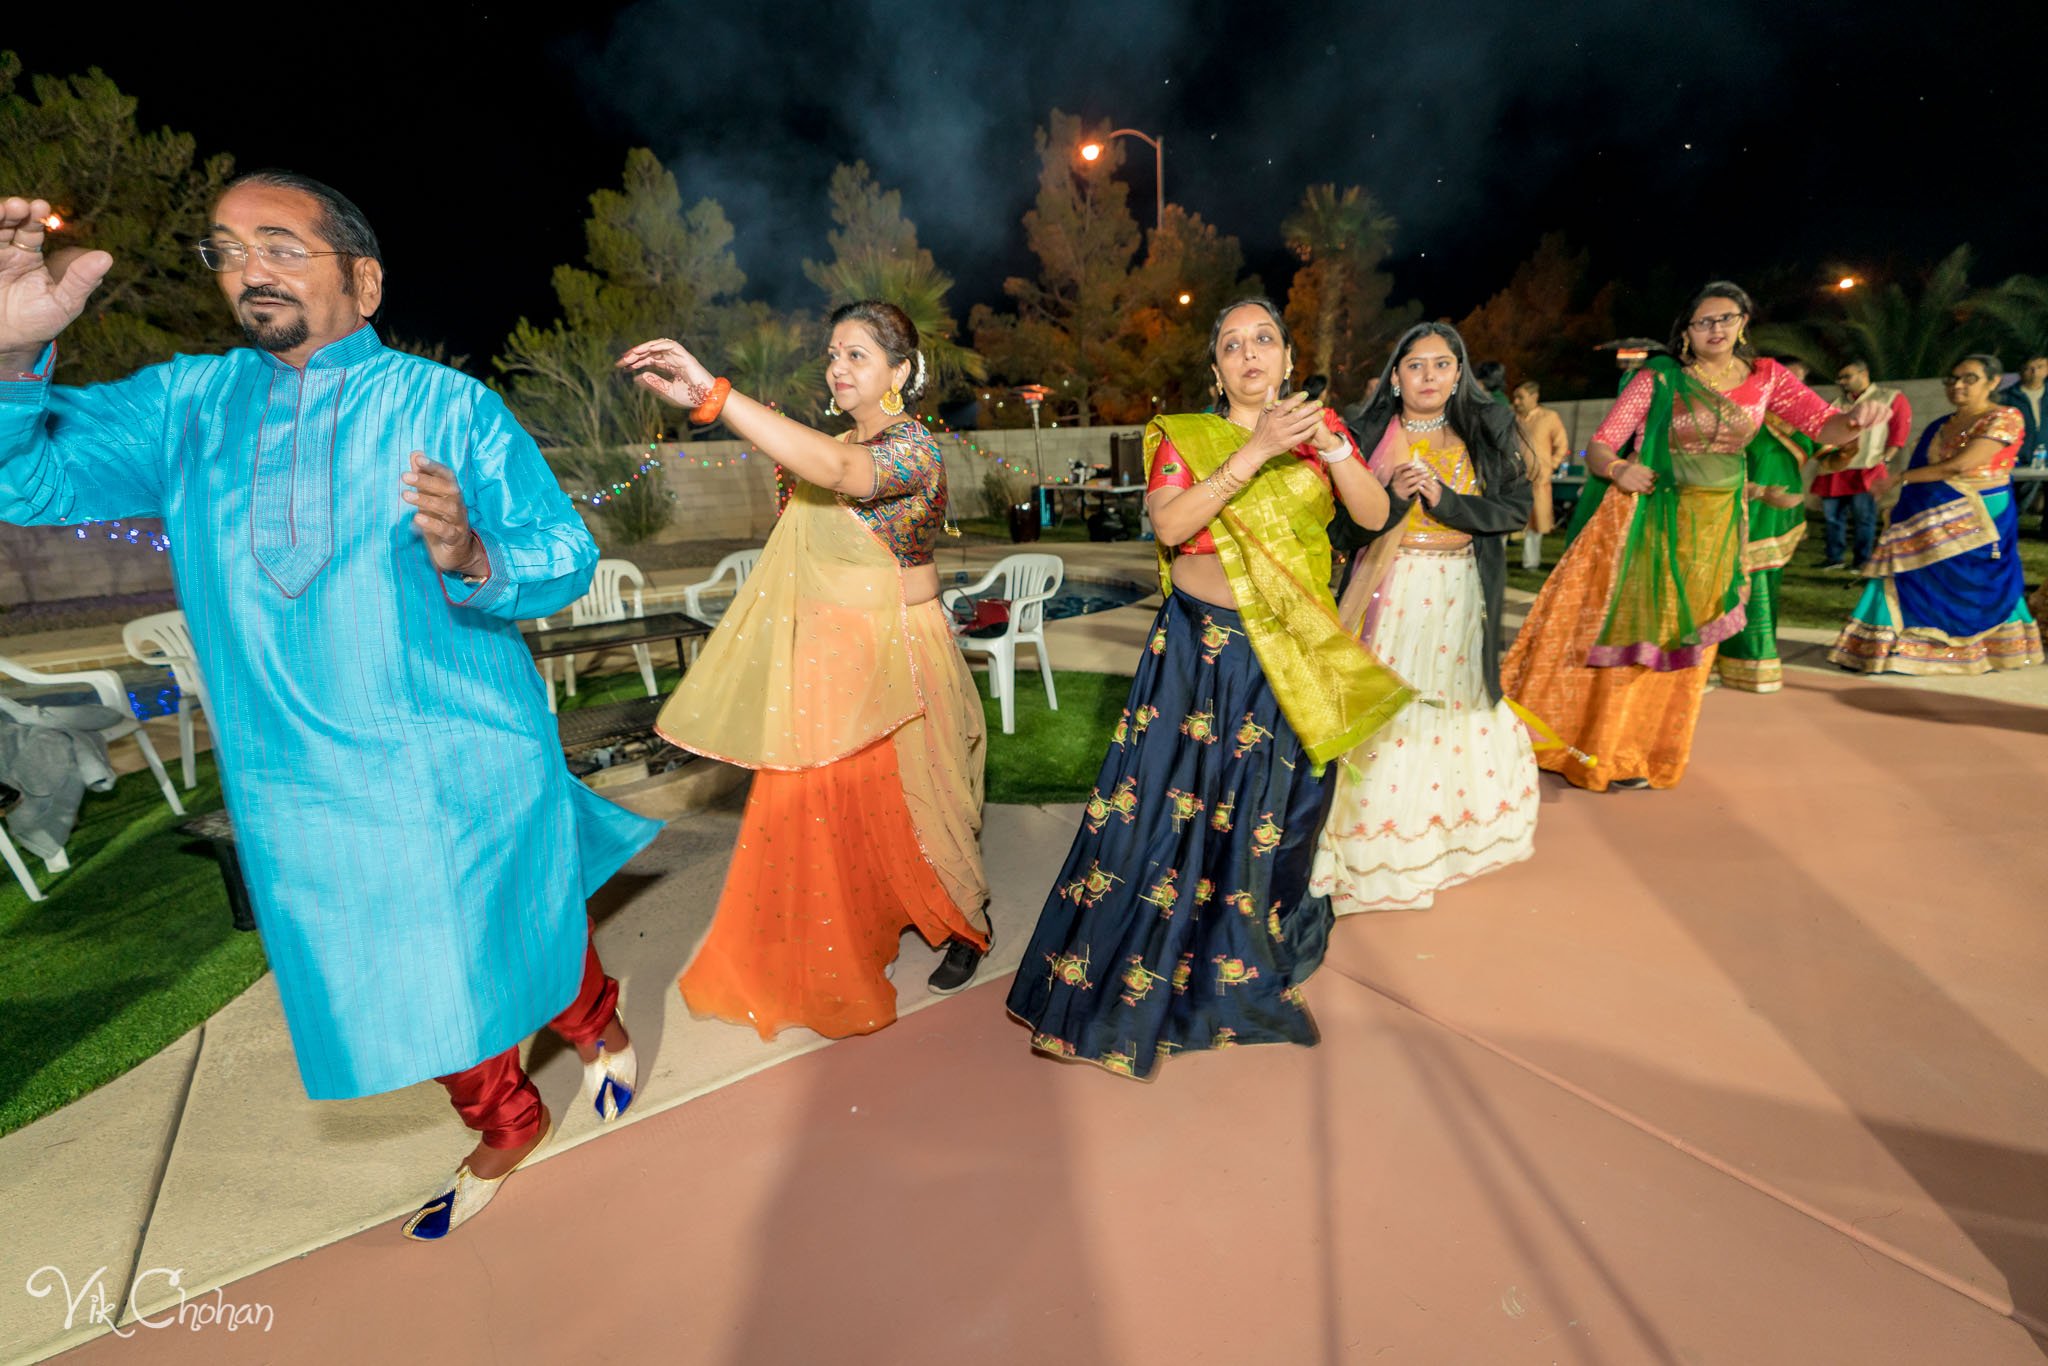 2022-02-04-Hely-&-Parth-Garba-Night-Indian-Wedding-Vik-Chohan-Photography-Photo-Booth-Social-Media-VCP-093.jpg